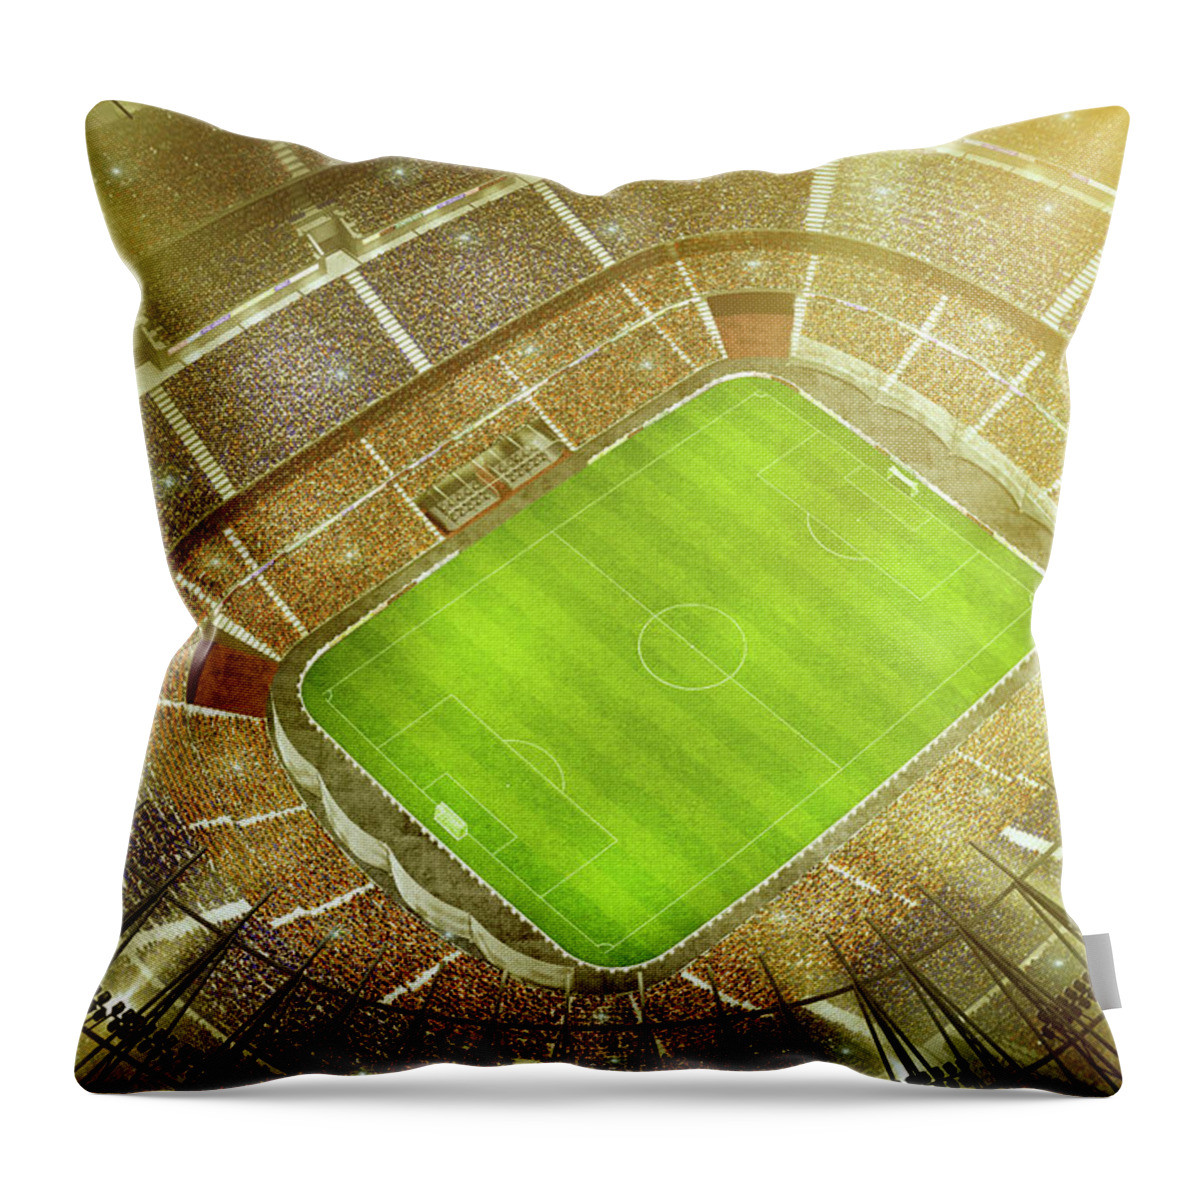 Event Throw Pillow featuring the photograph Soccer Stadium Bird Eye View by Dmytro Aksonov